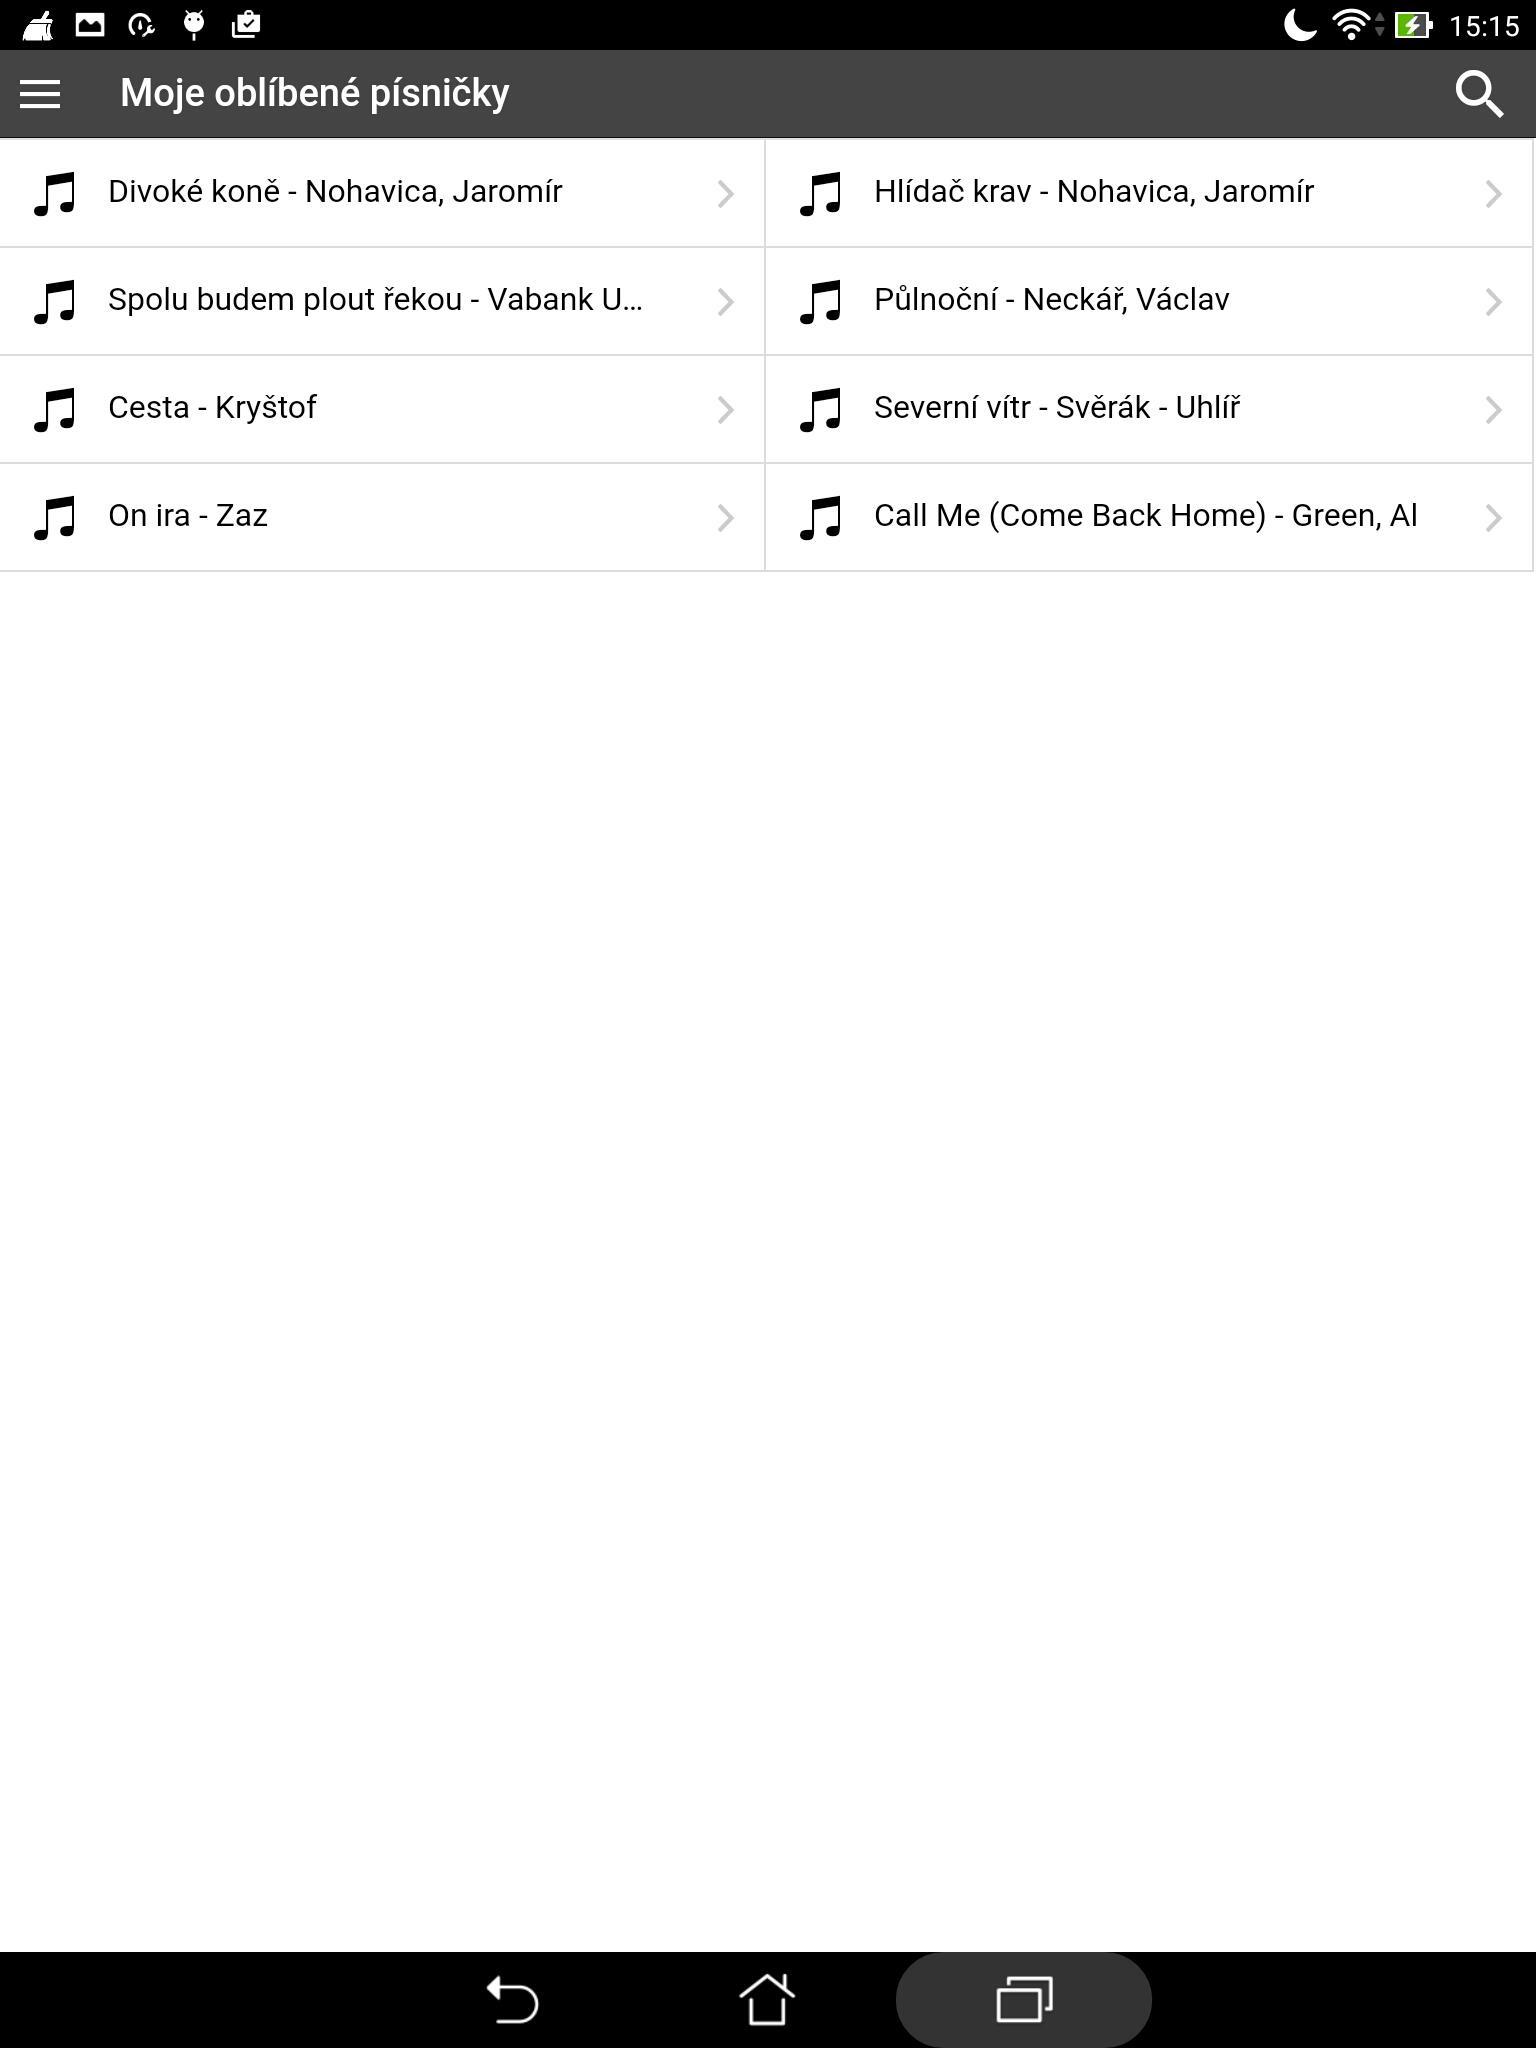 Písničky-Akordy for Android - APK Download